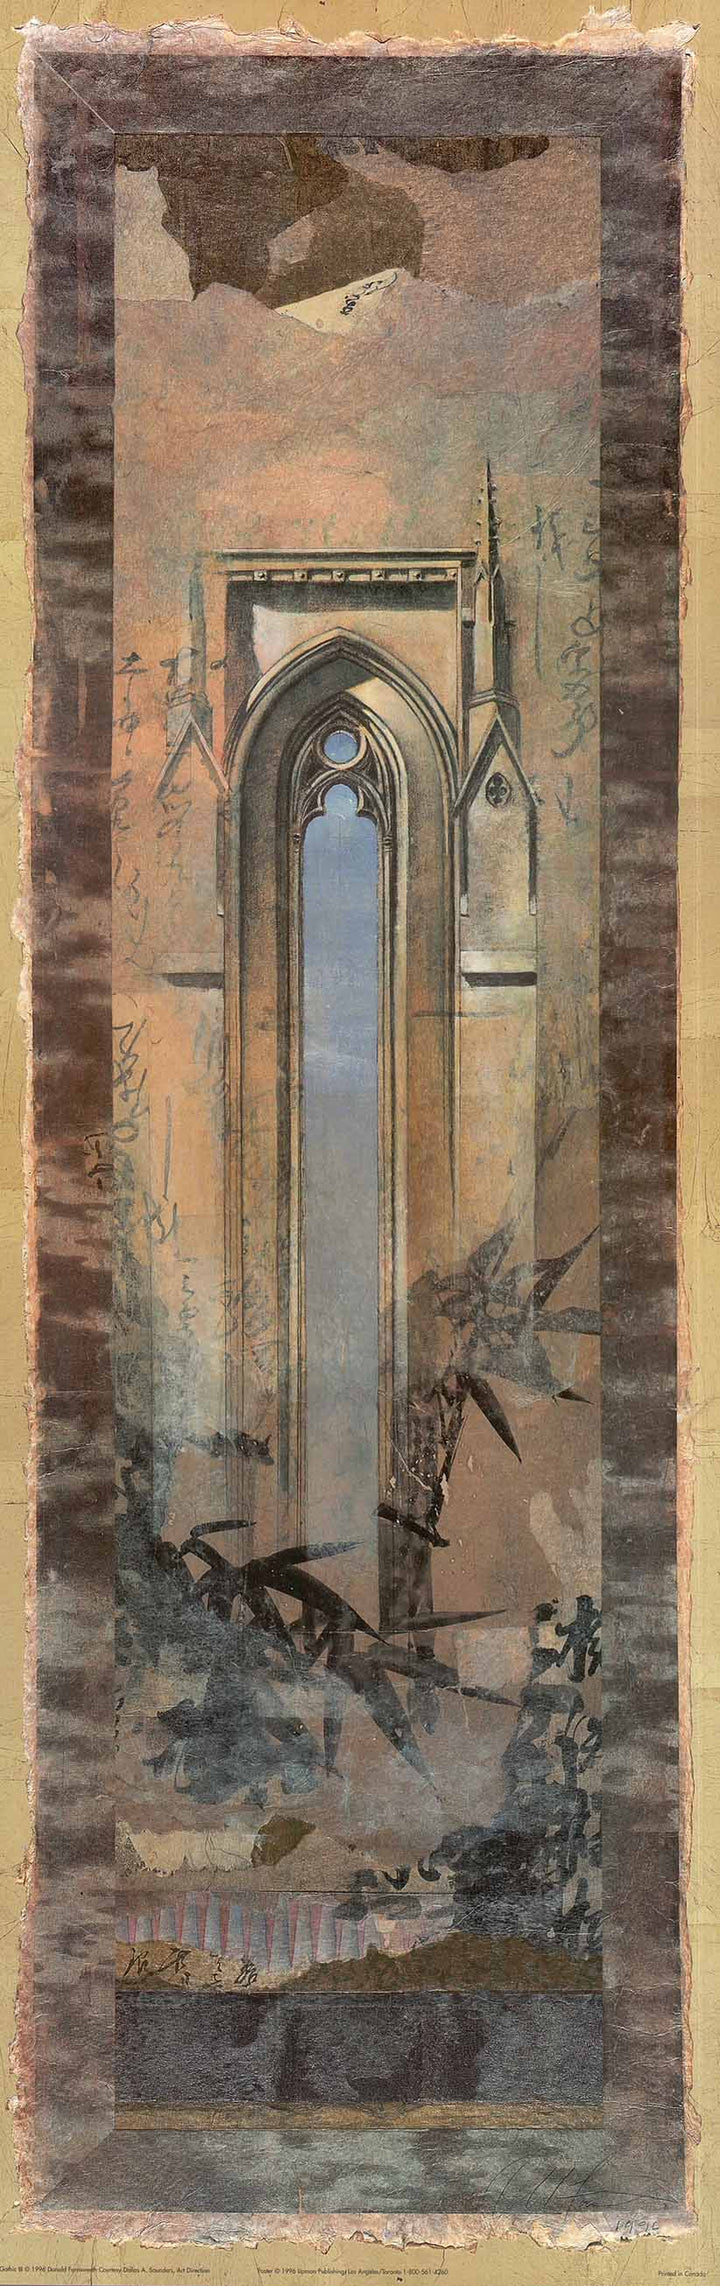 Gothic III, 1996 by Donald Farnsworth - 12 X 36" - Fine Art Poster.